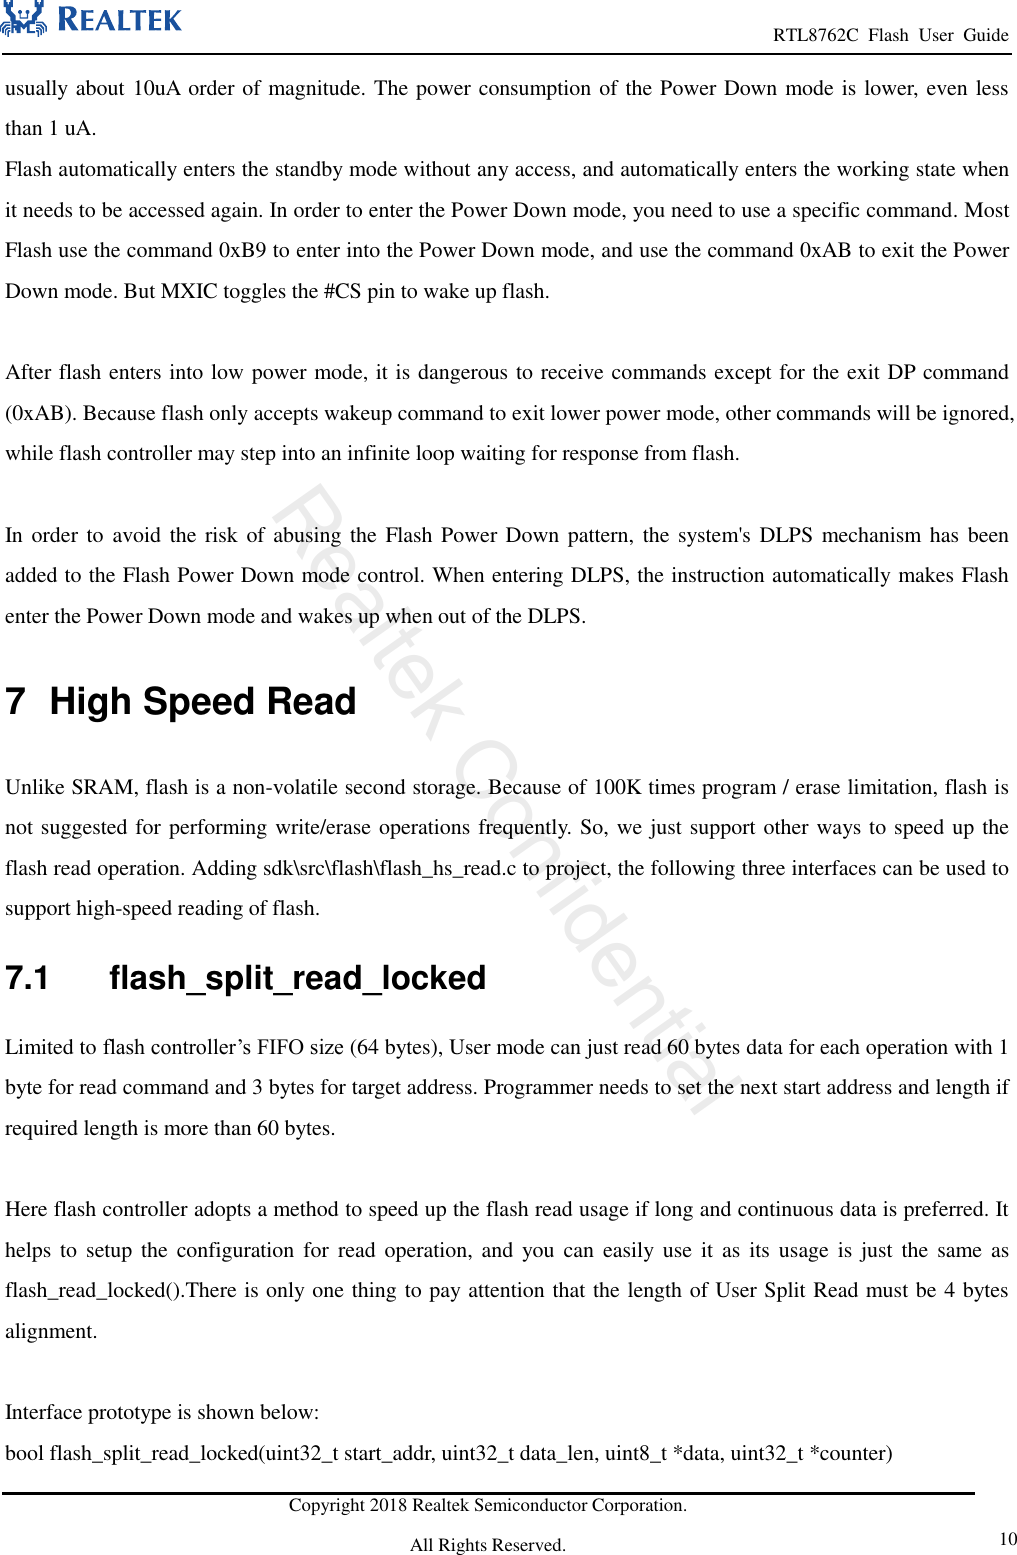 Page 10 of 12 - Flash User Guide RTL8762C EN